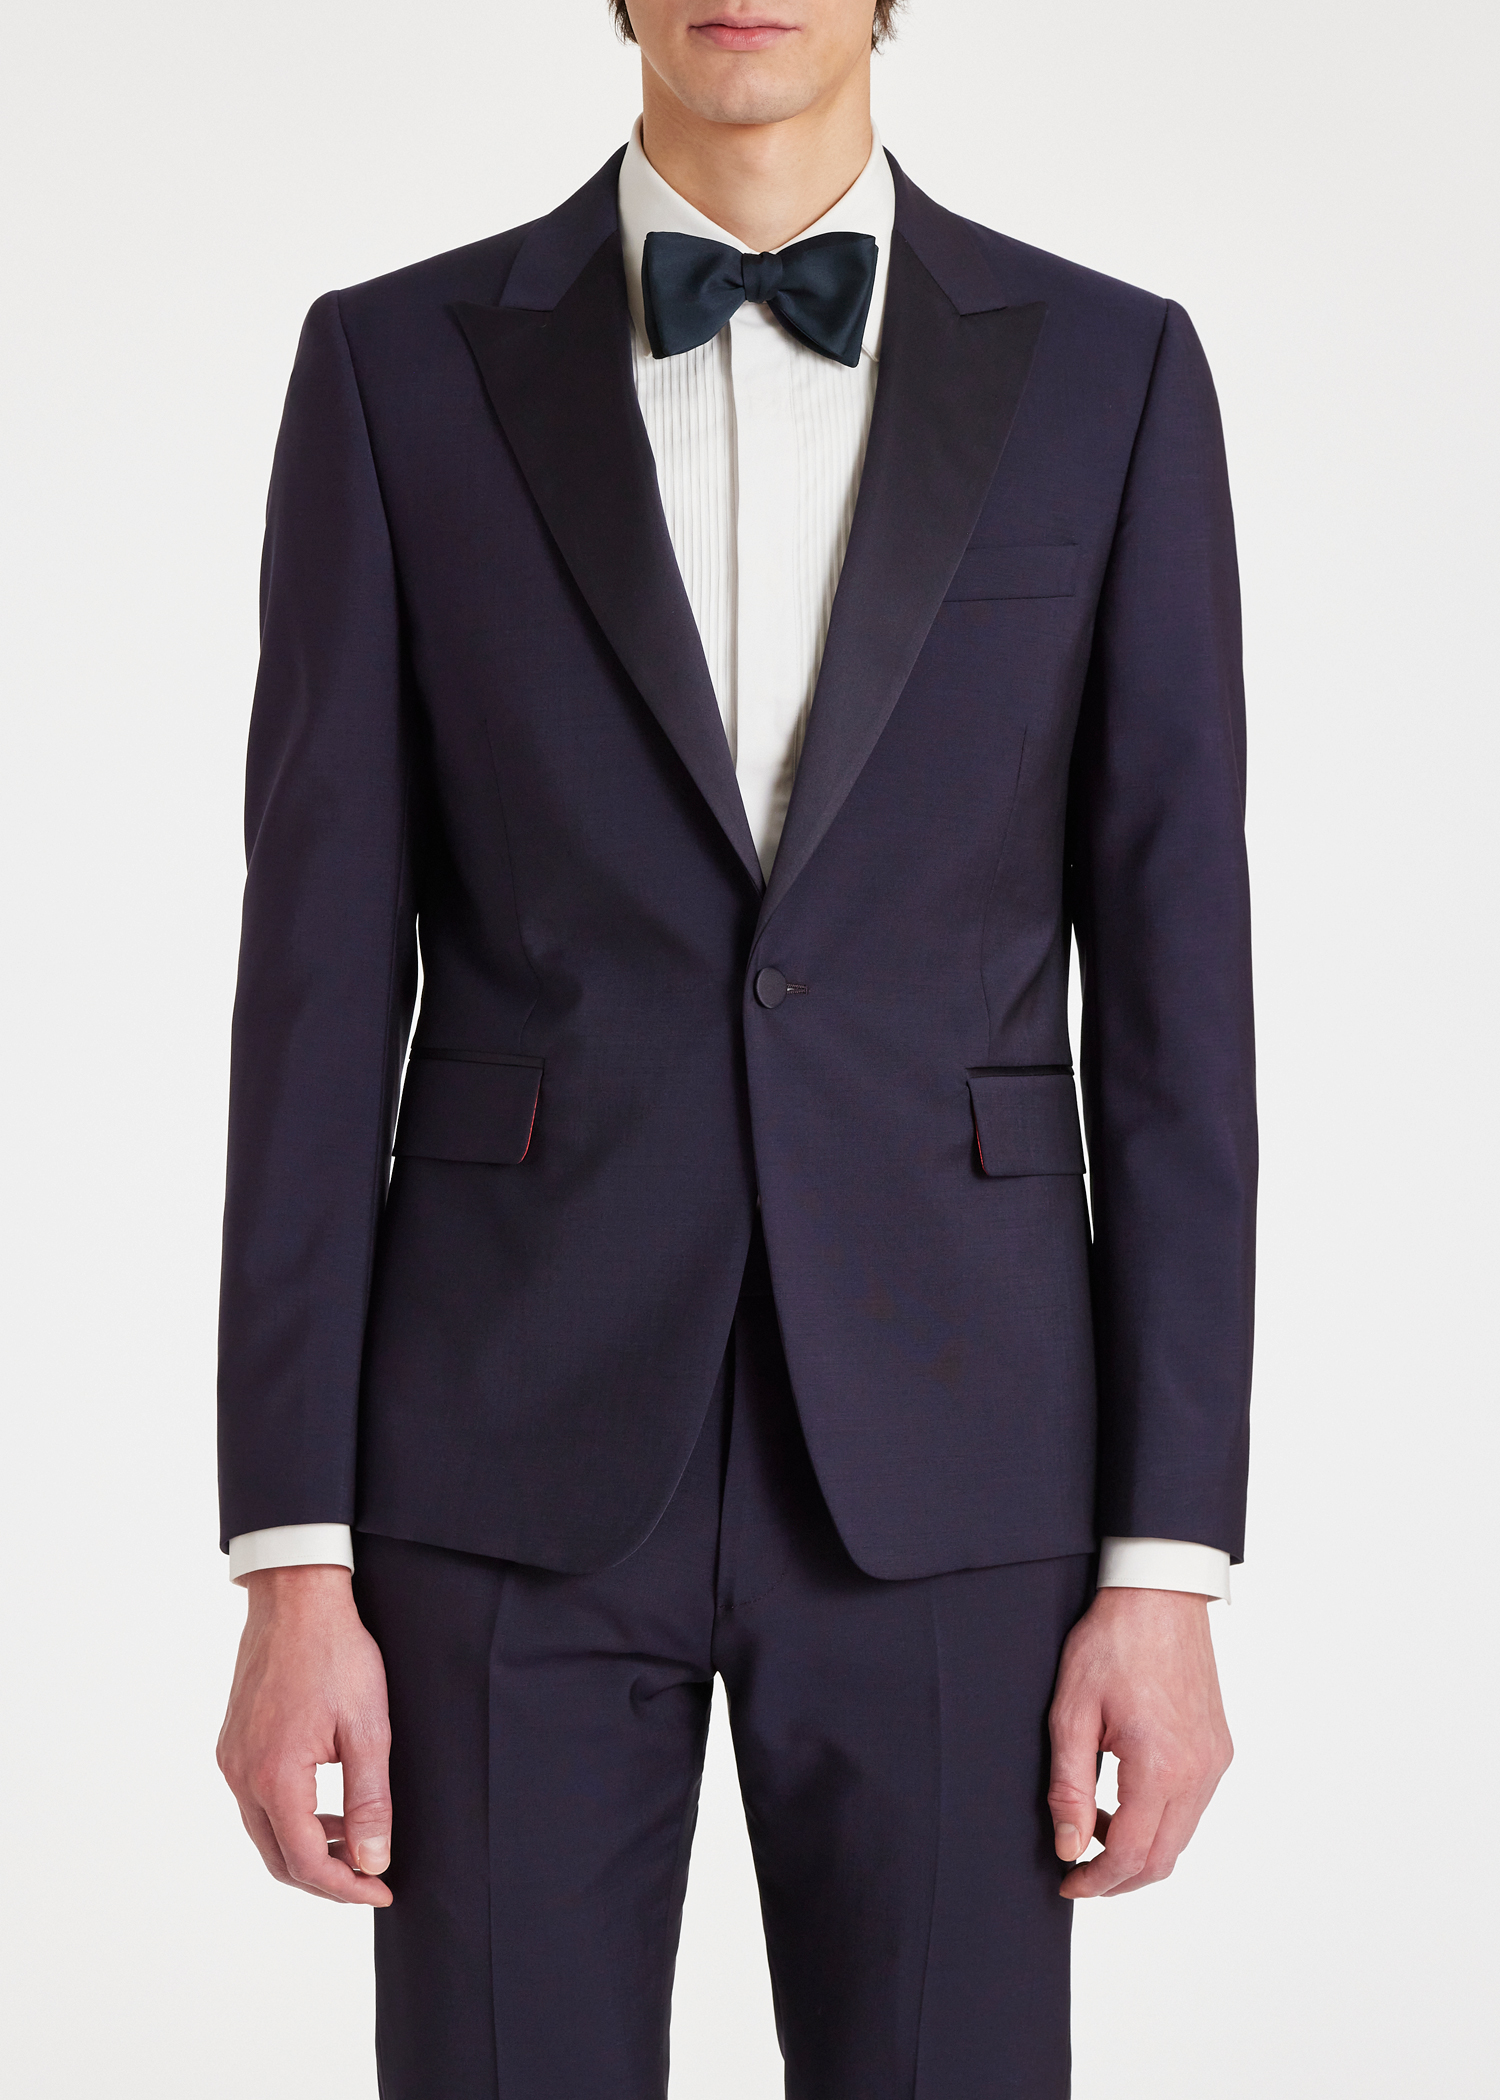 Designer Evening Suits for Men | Paul Smith